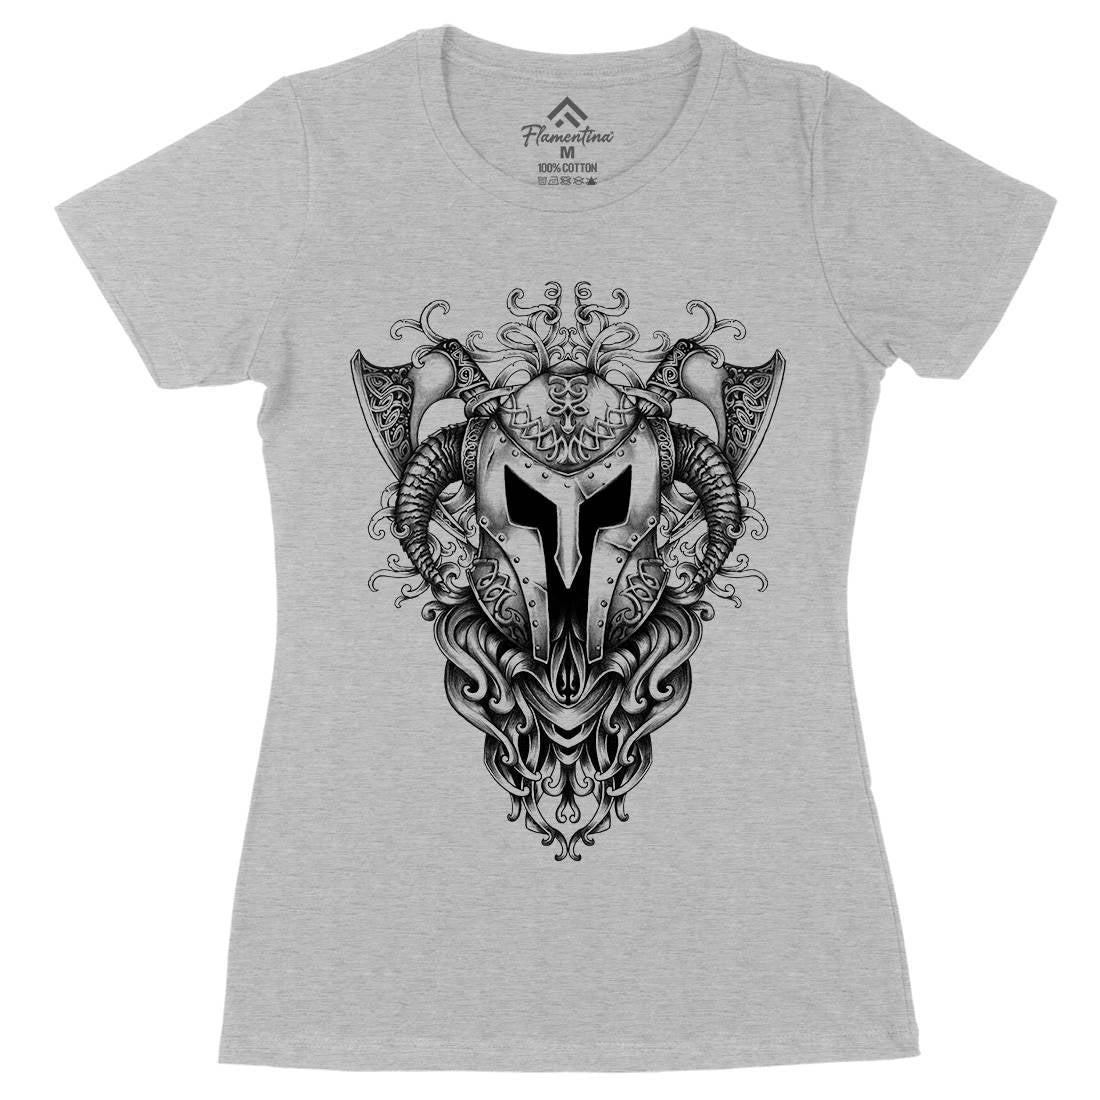 Armor Of Viking Womens Organic Crew Neck T-Shirt Warriors A479